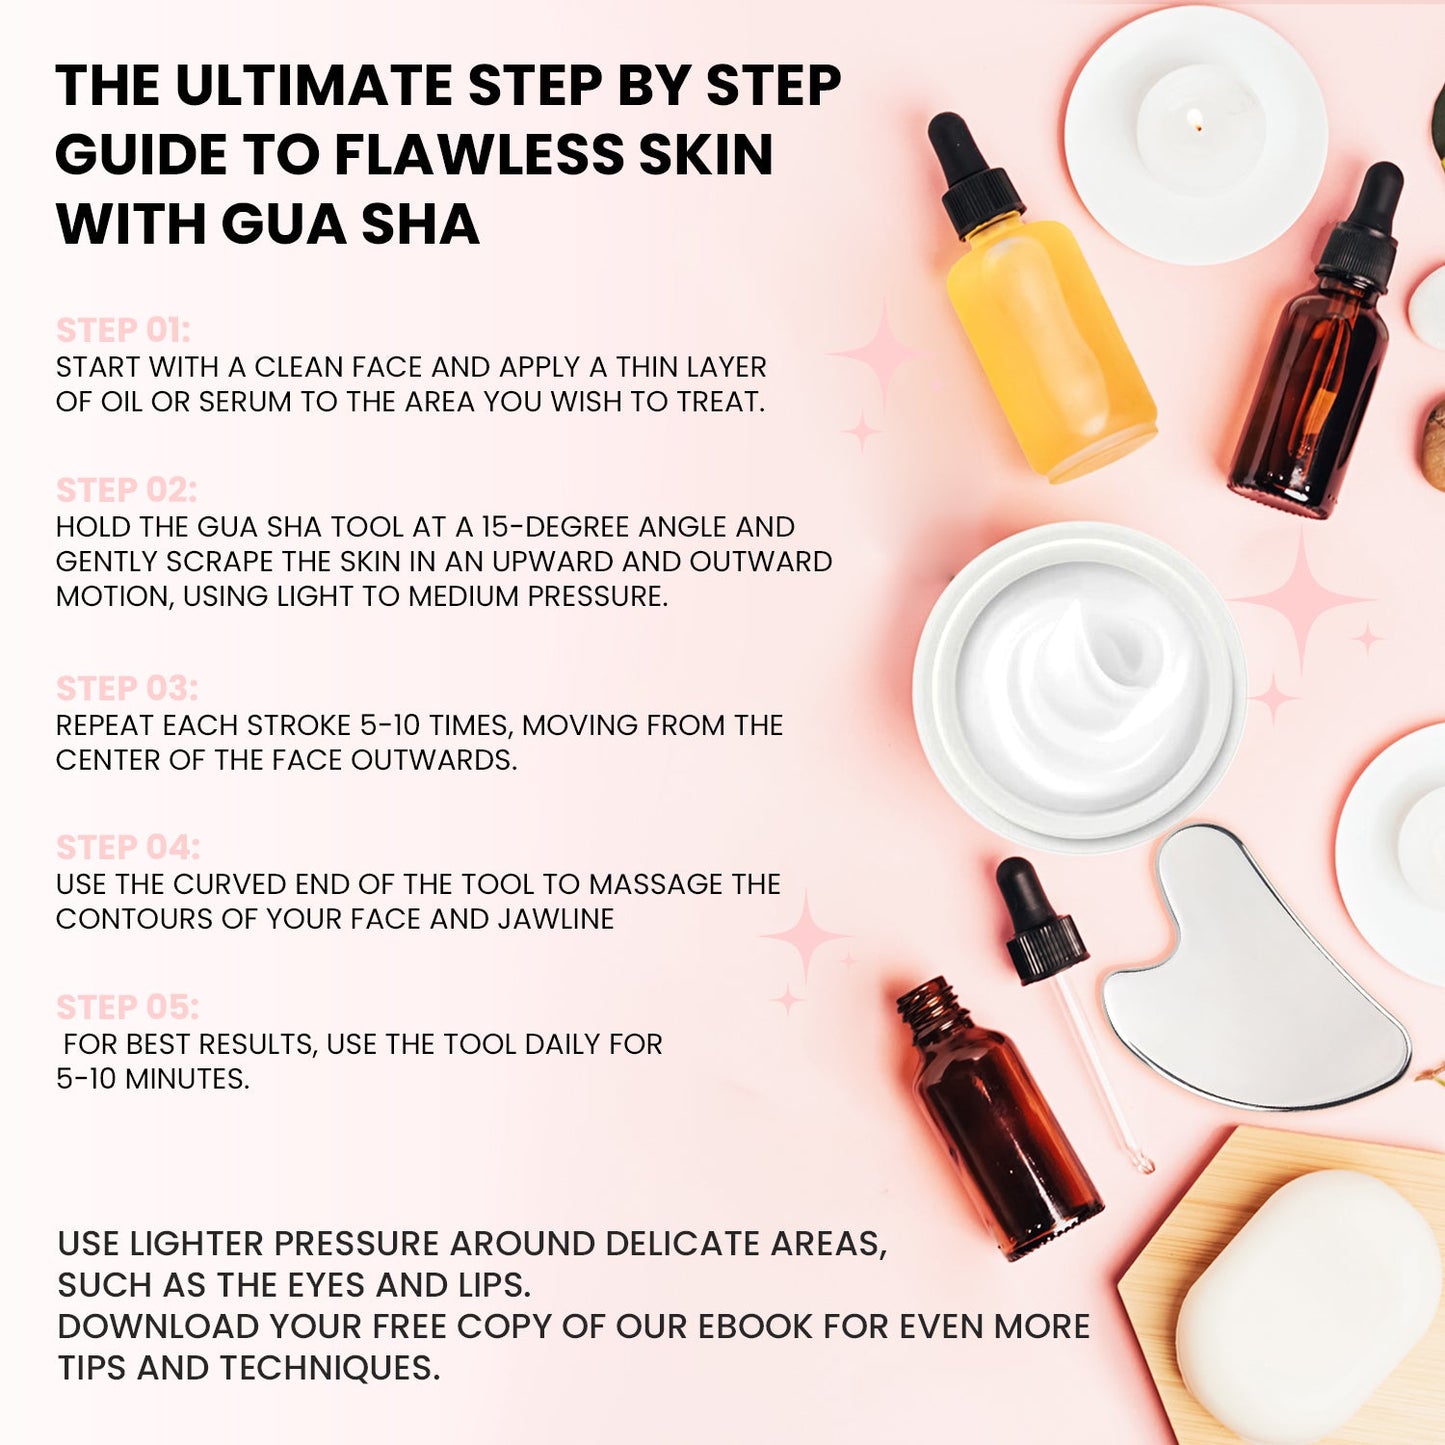 Sacred Healing Gua Sha Facial Massage Tool